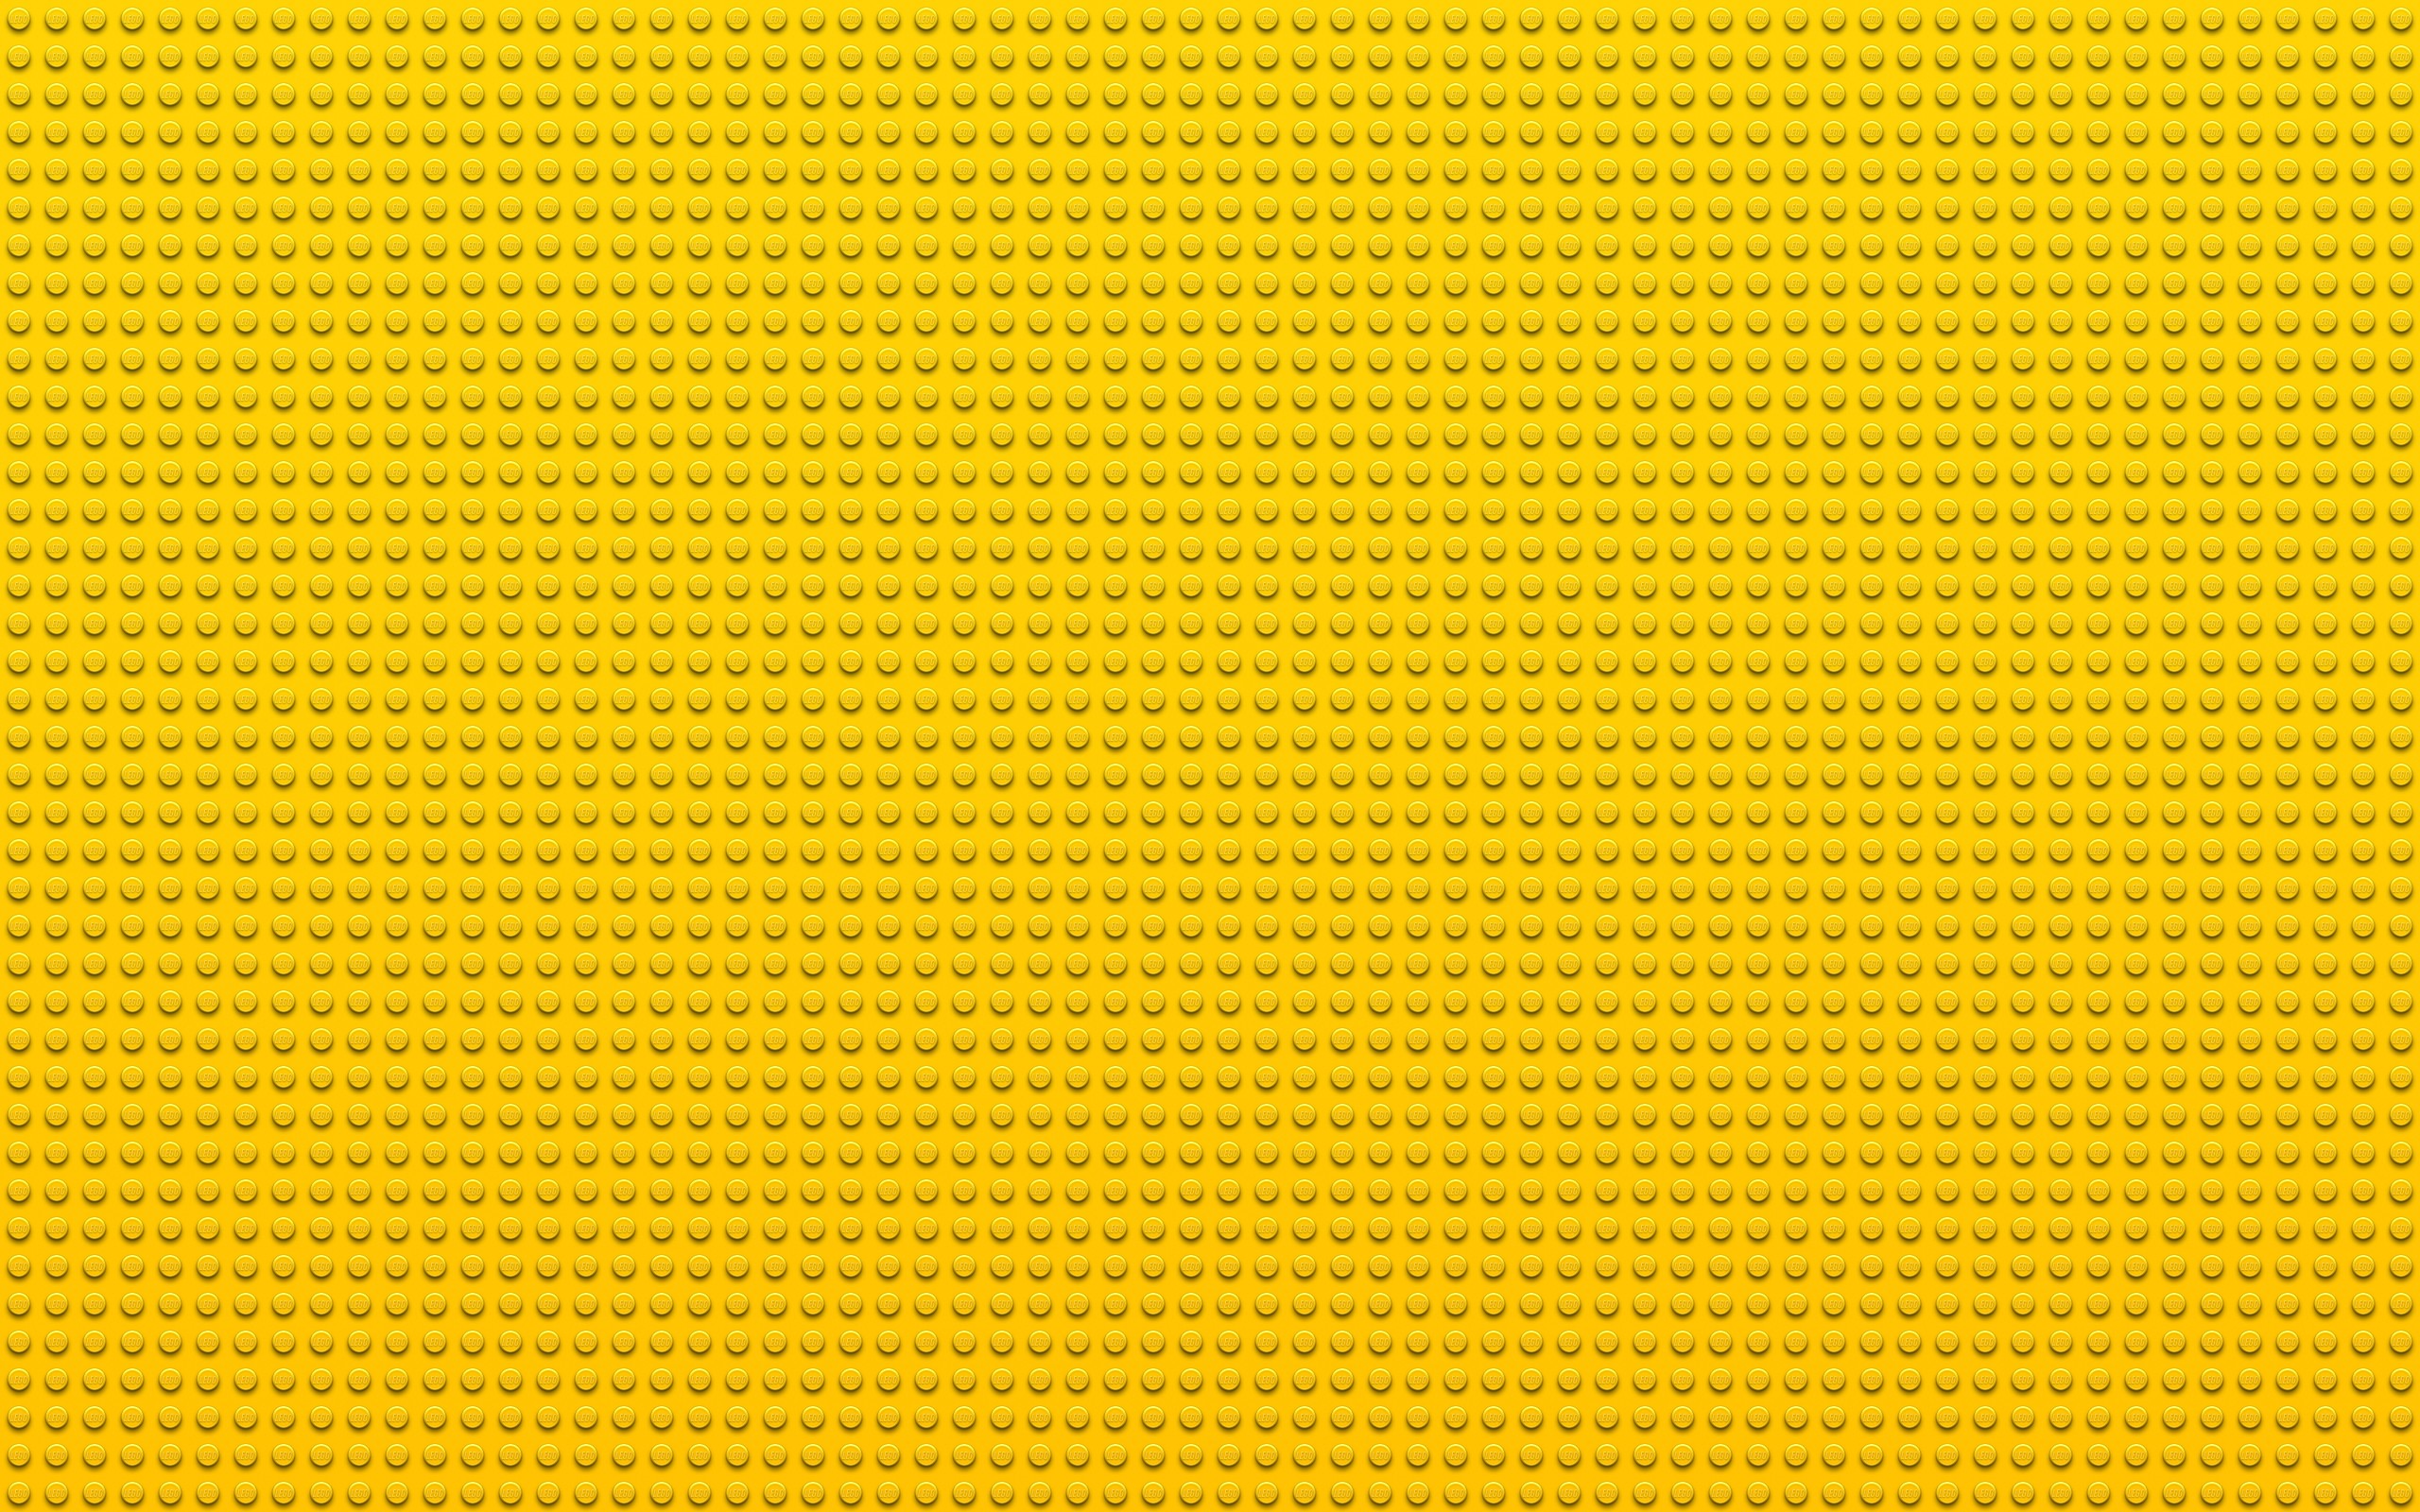 Lego Yellow Wallpaper Textures Dots